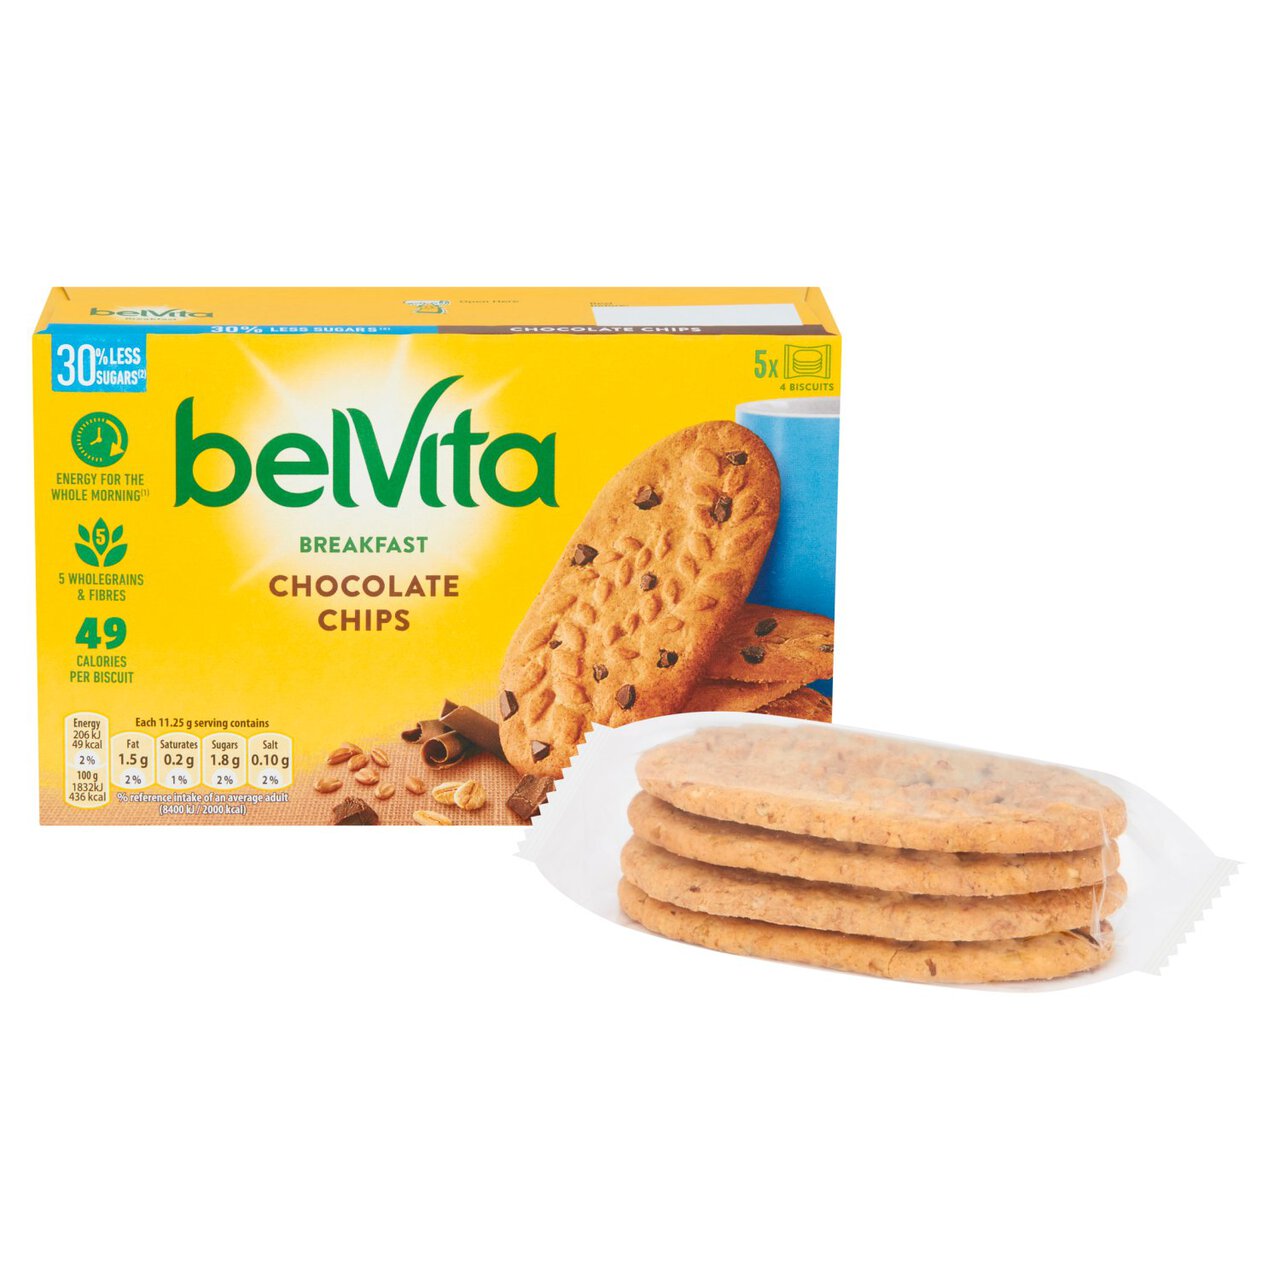 Belvita 30% Less Sugar Chocolate Chips Breakfast Biscuits 5 per pack